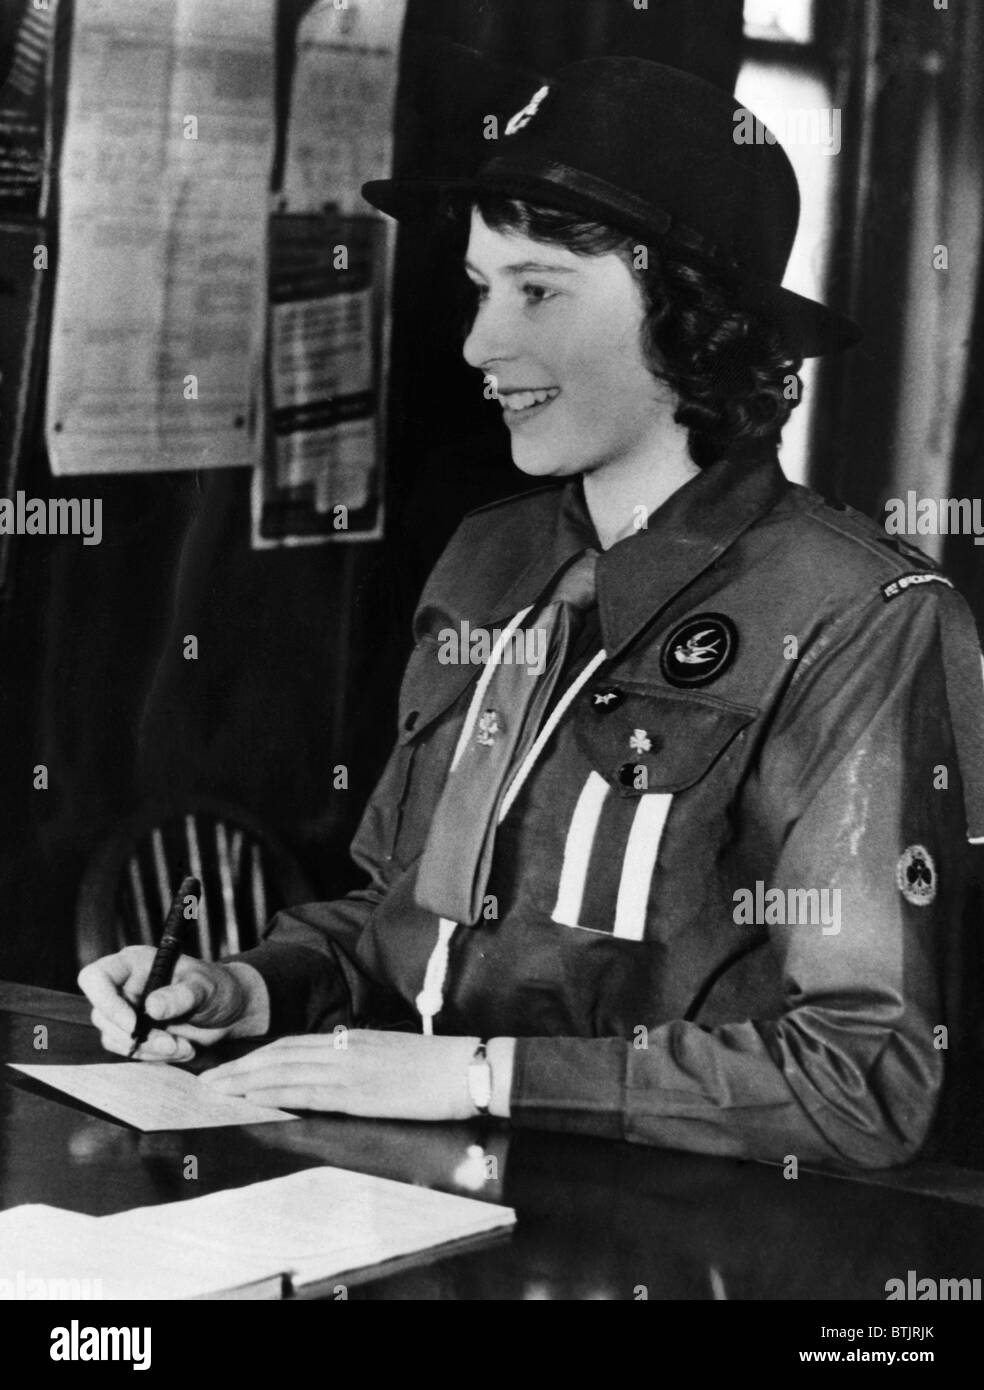 La principessa Elisabetta, (la futura regina Elizabeth II), nella sua guida ragazza uniforme, c. 1942. Foto Stock